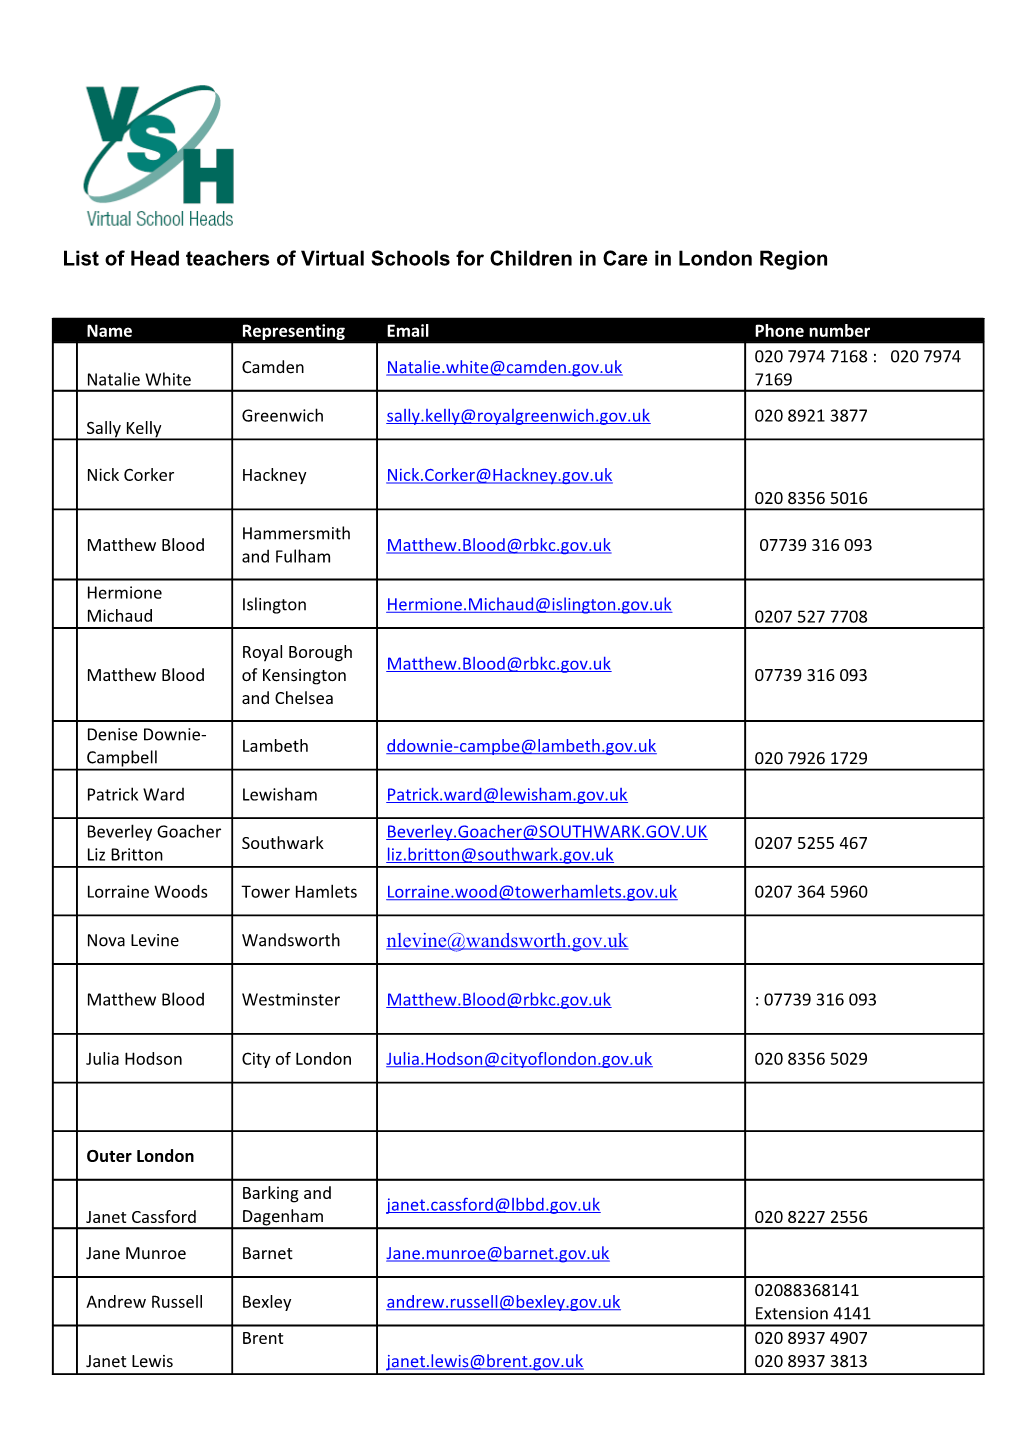 List of Head Teachers of Virtual Schools for Children in Care in London Region